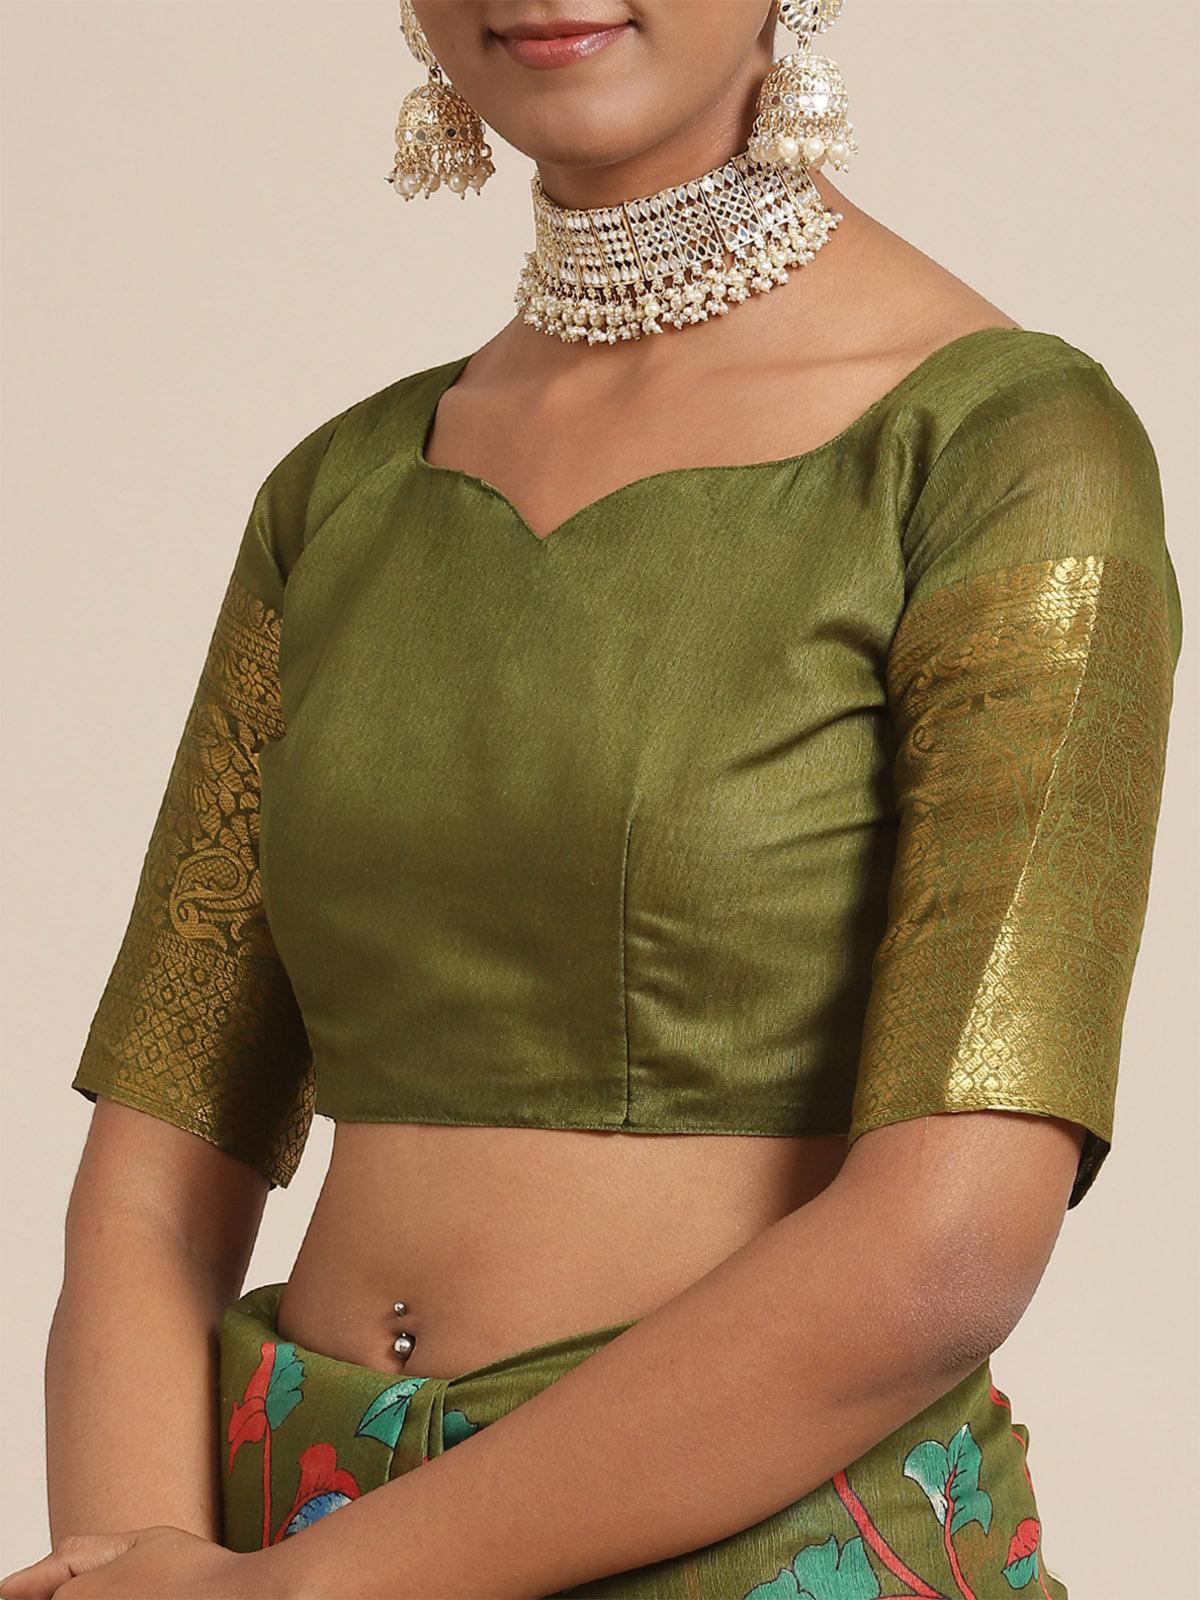 Women's Cotton Blend Olive Printed Designer Saree With Blouse Piece - Odette